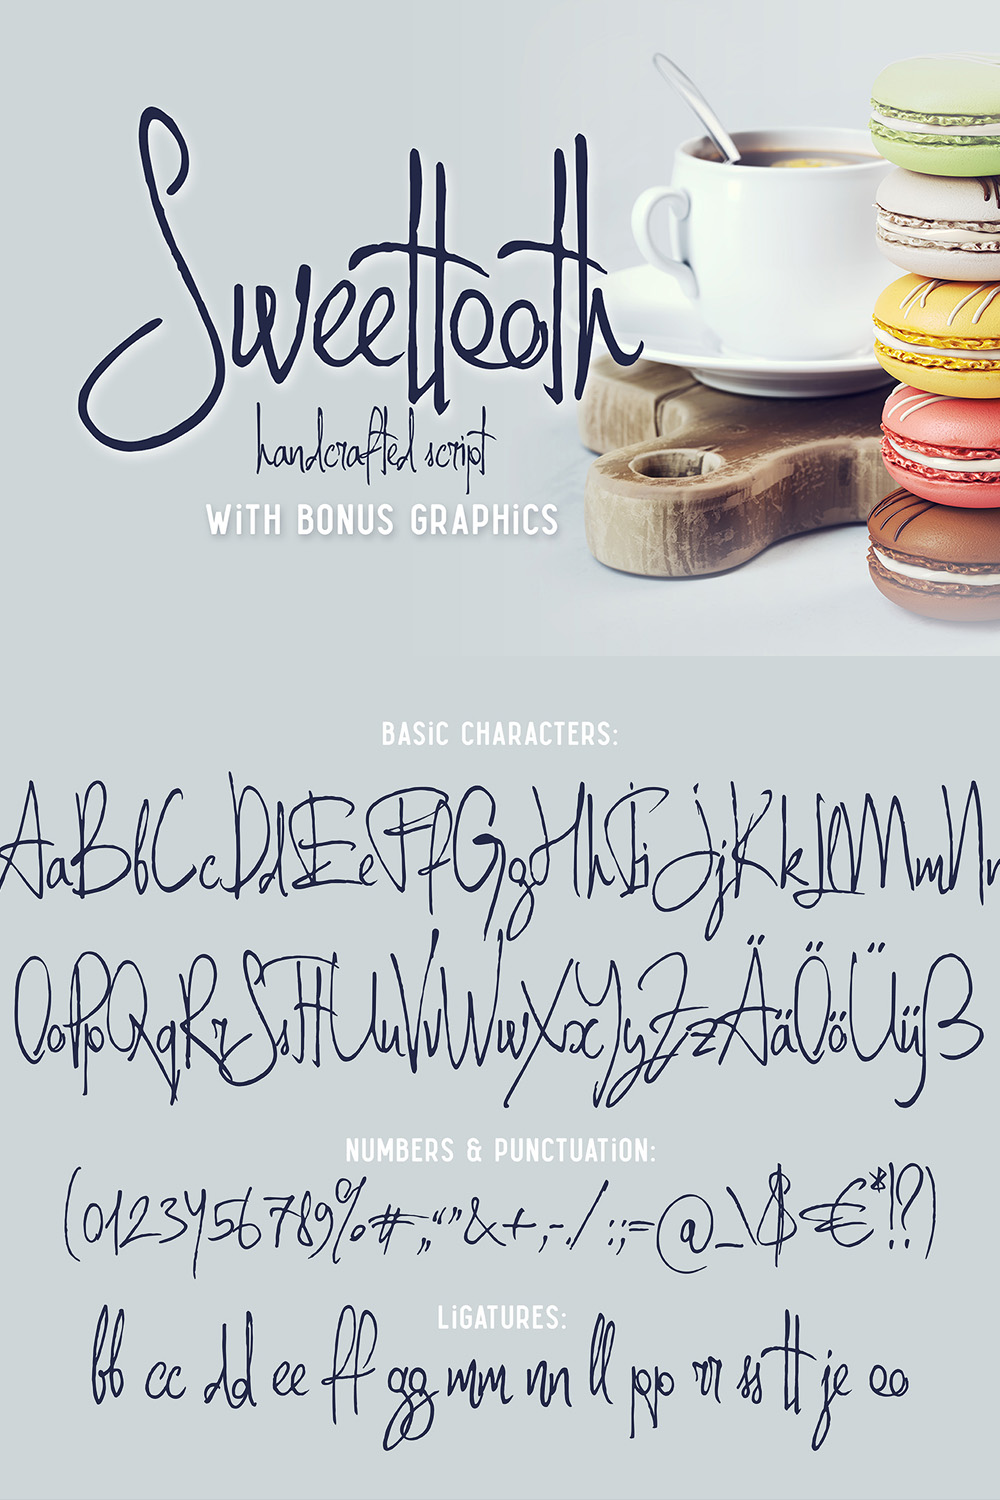 Sweettooth Script Font pinterest image.